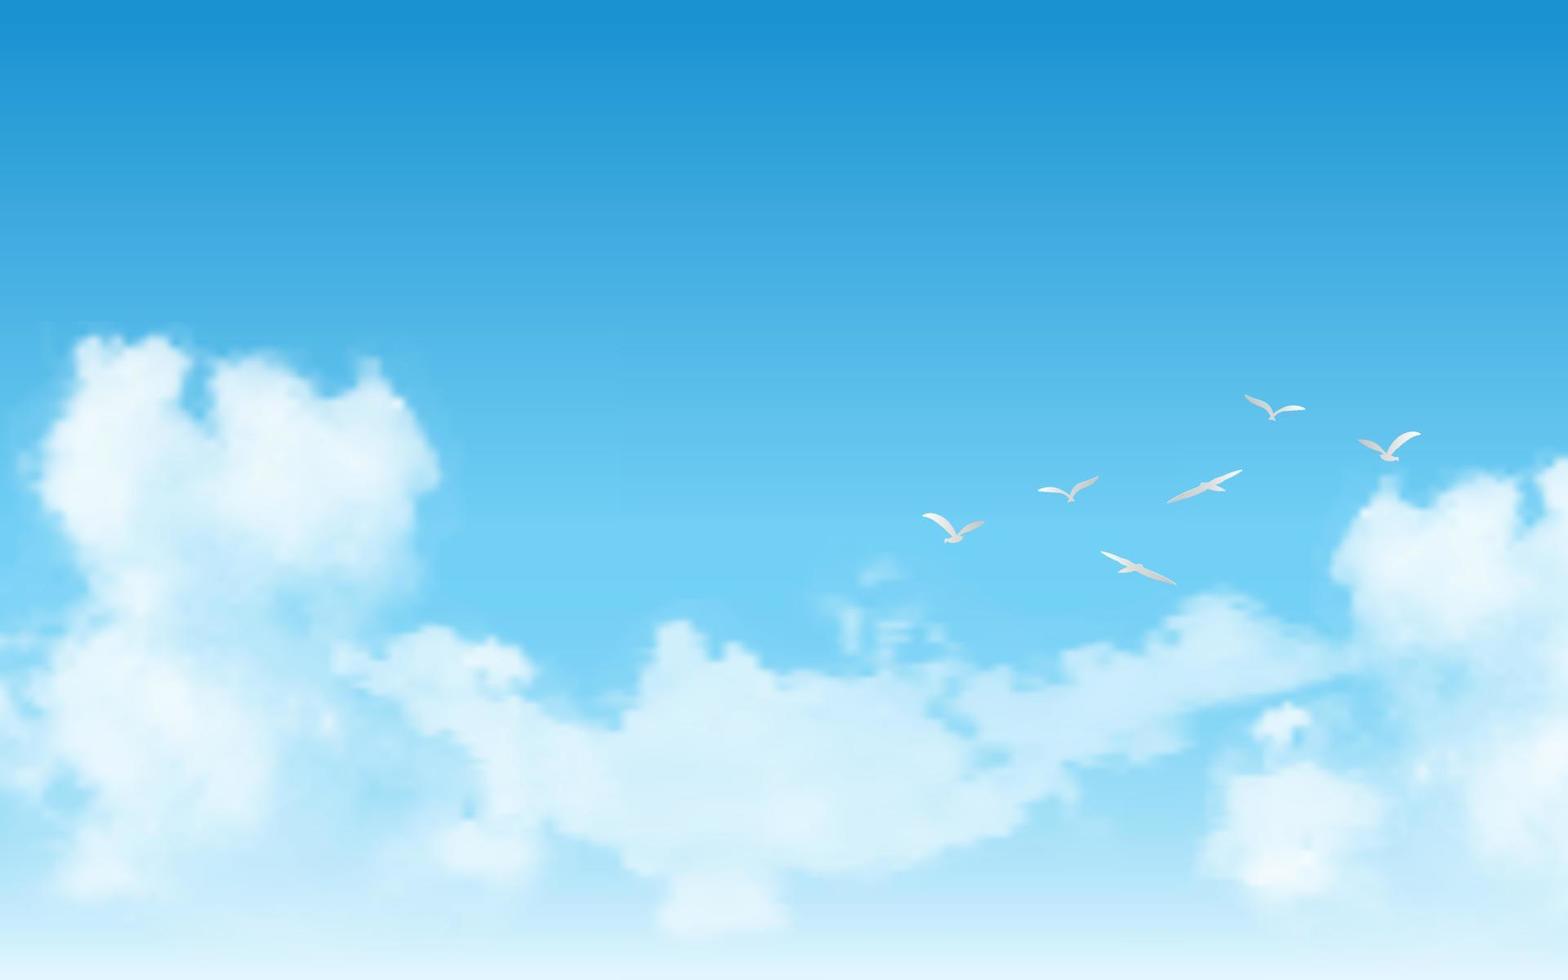 cielo azul realista con pájaros voladores vector